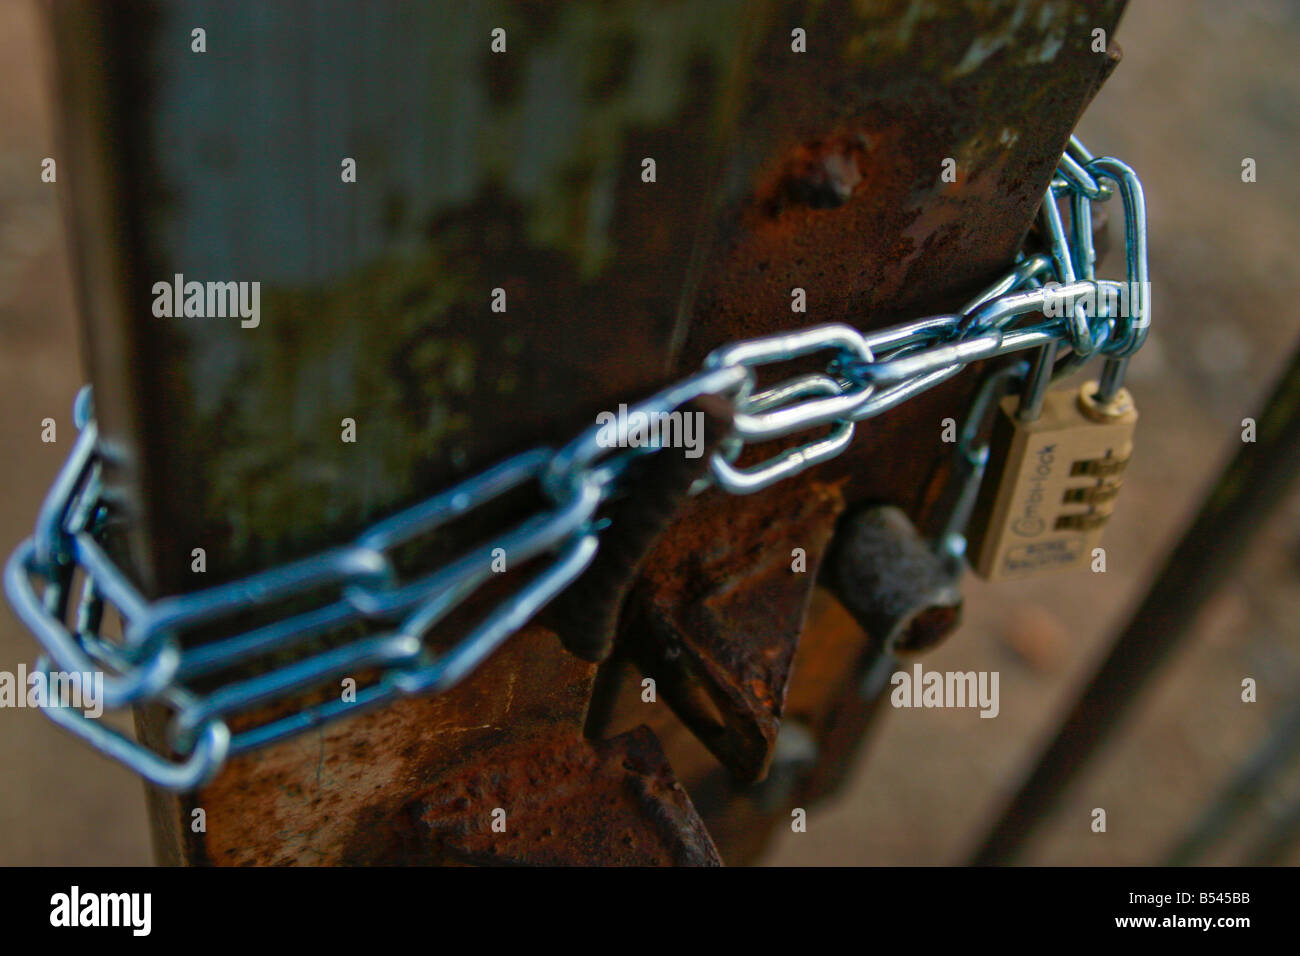 padlock with chain Stock Photo